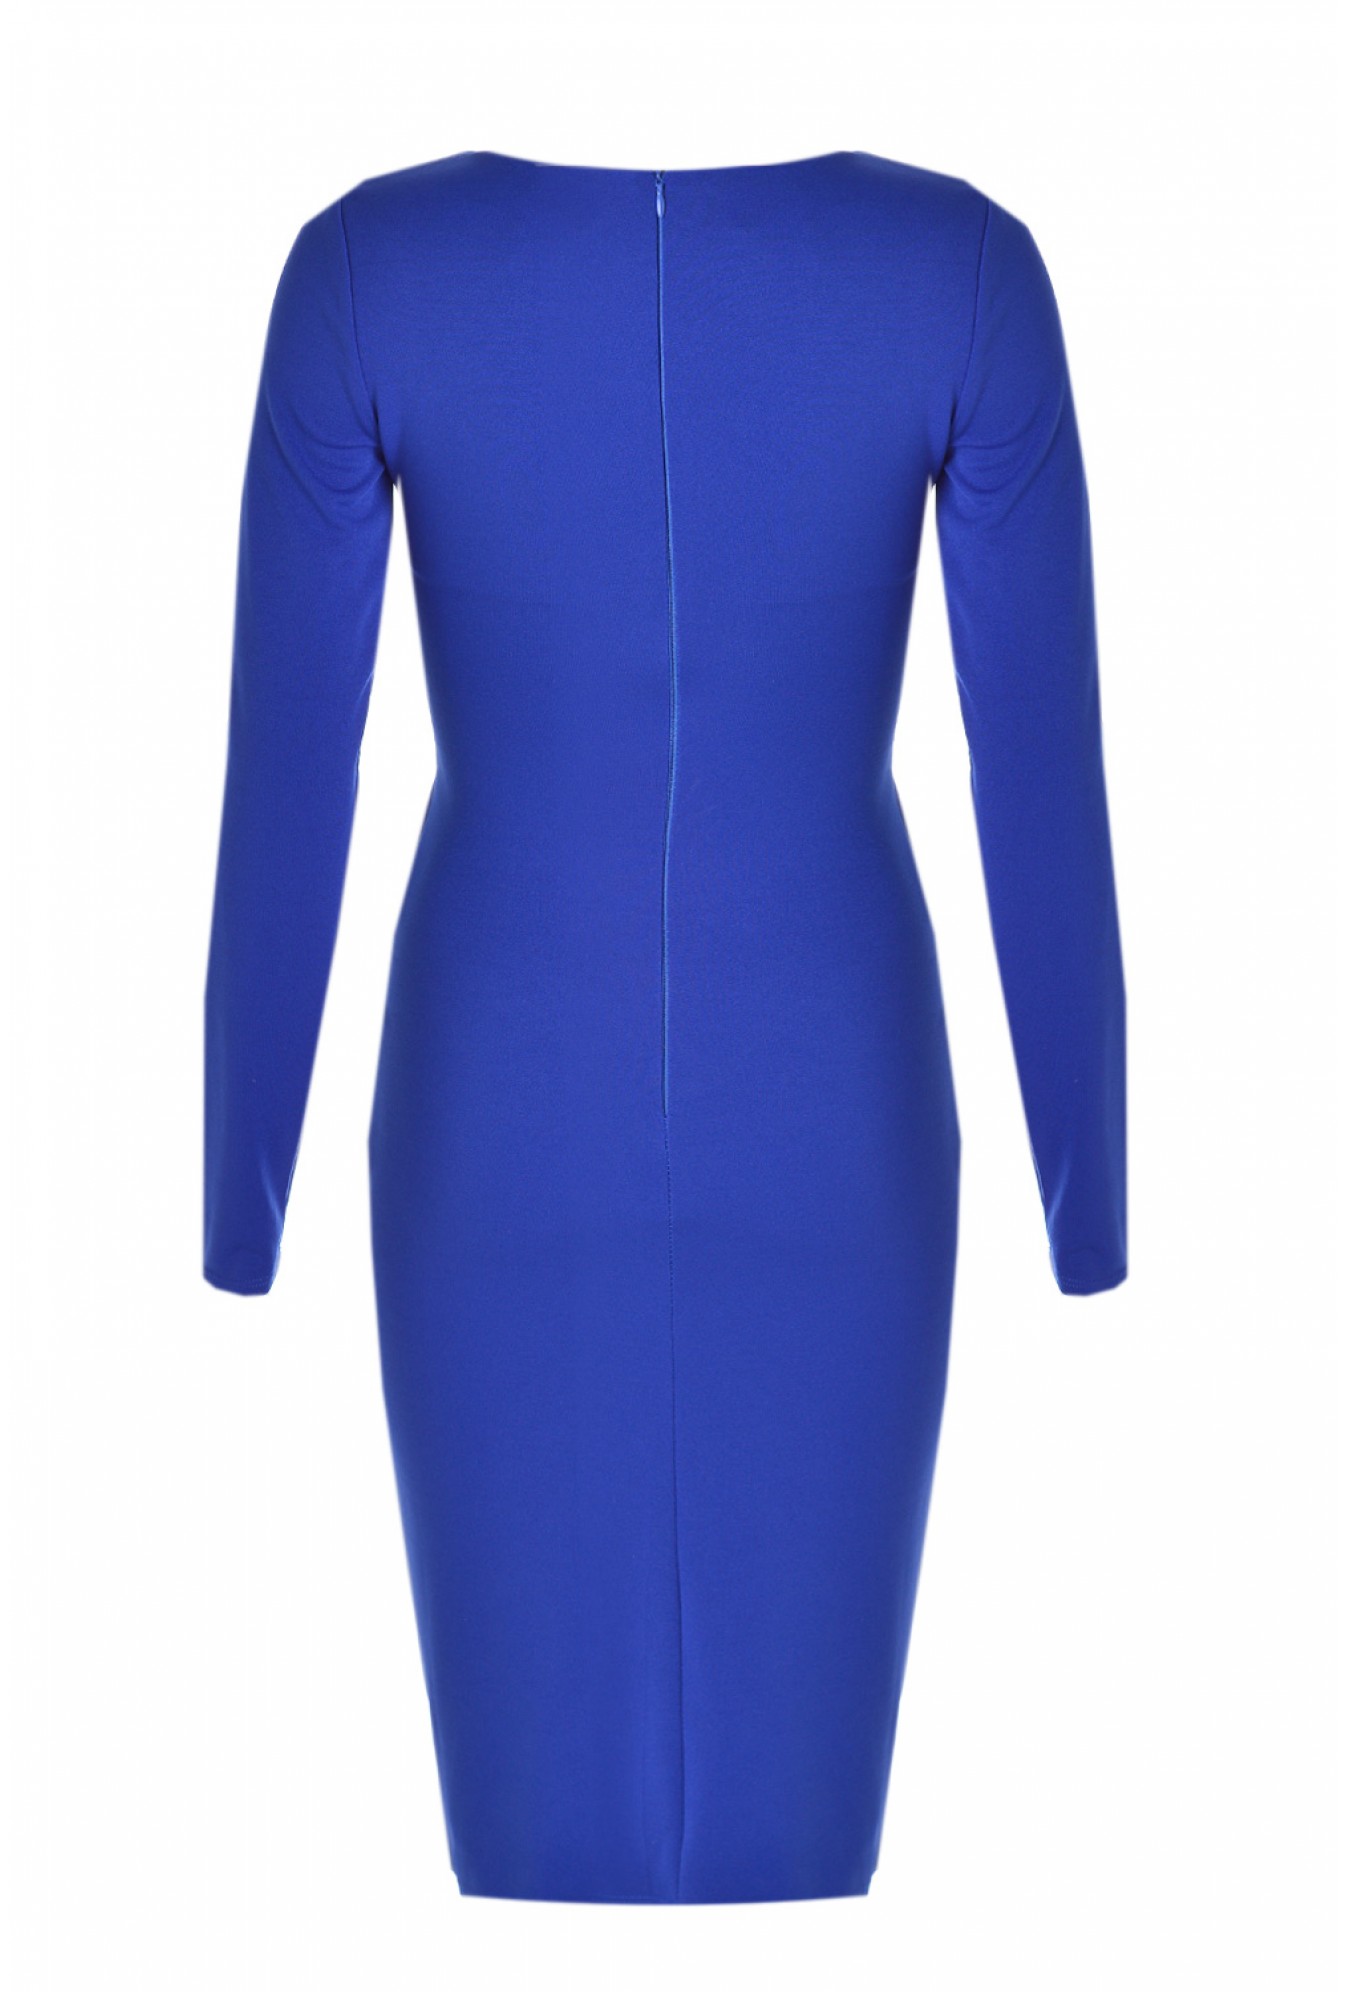 city goddess Delana Frill Detail Midi Dress in Royal Blue | iCLOTHING